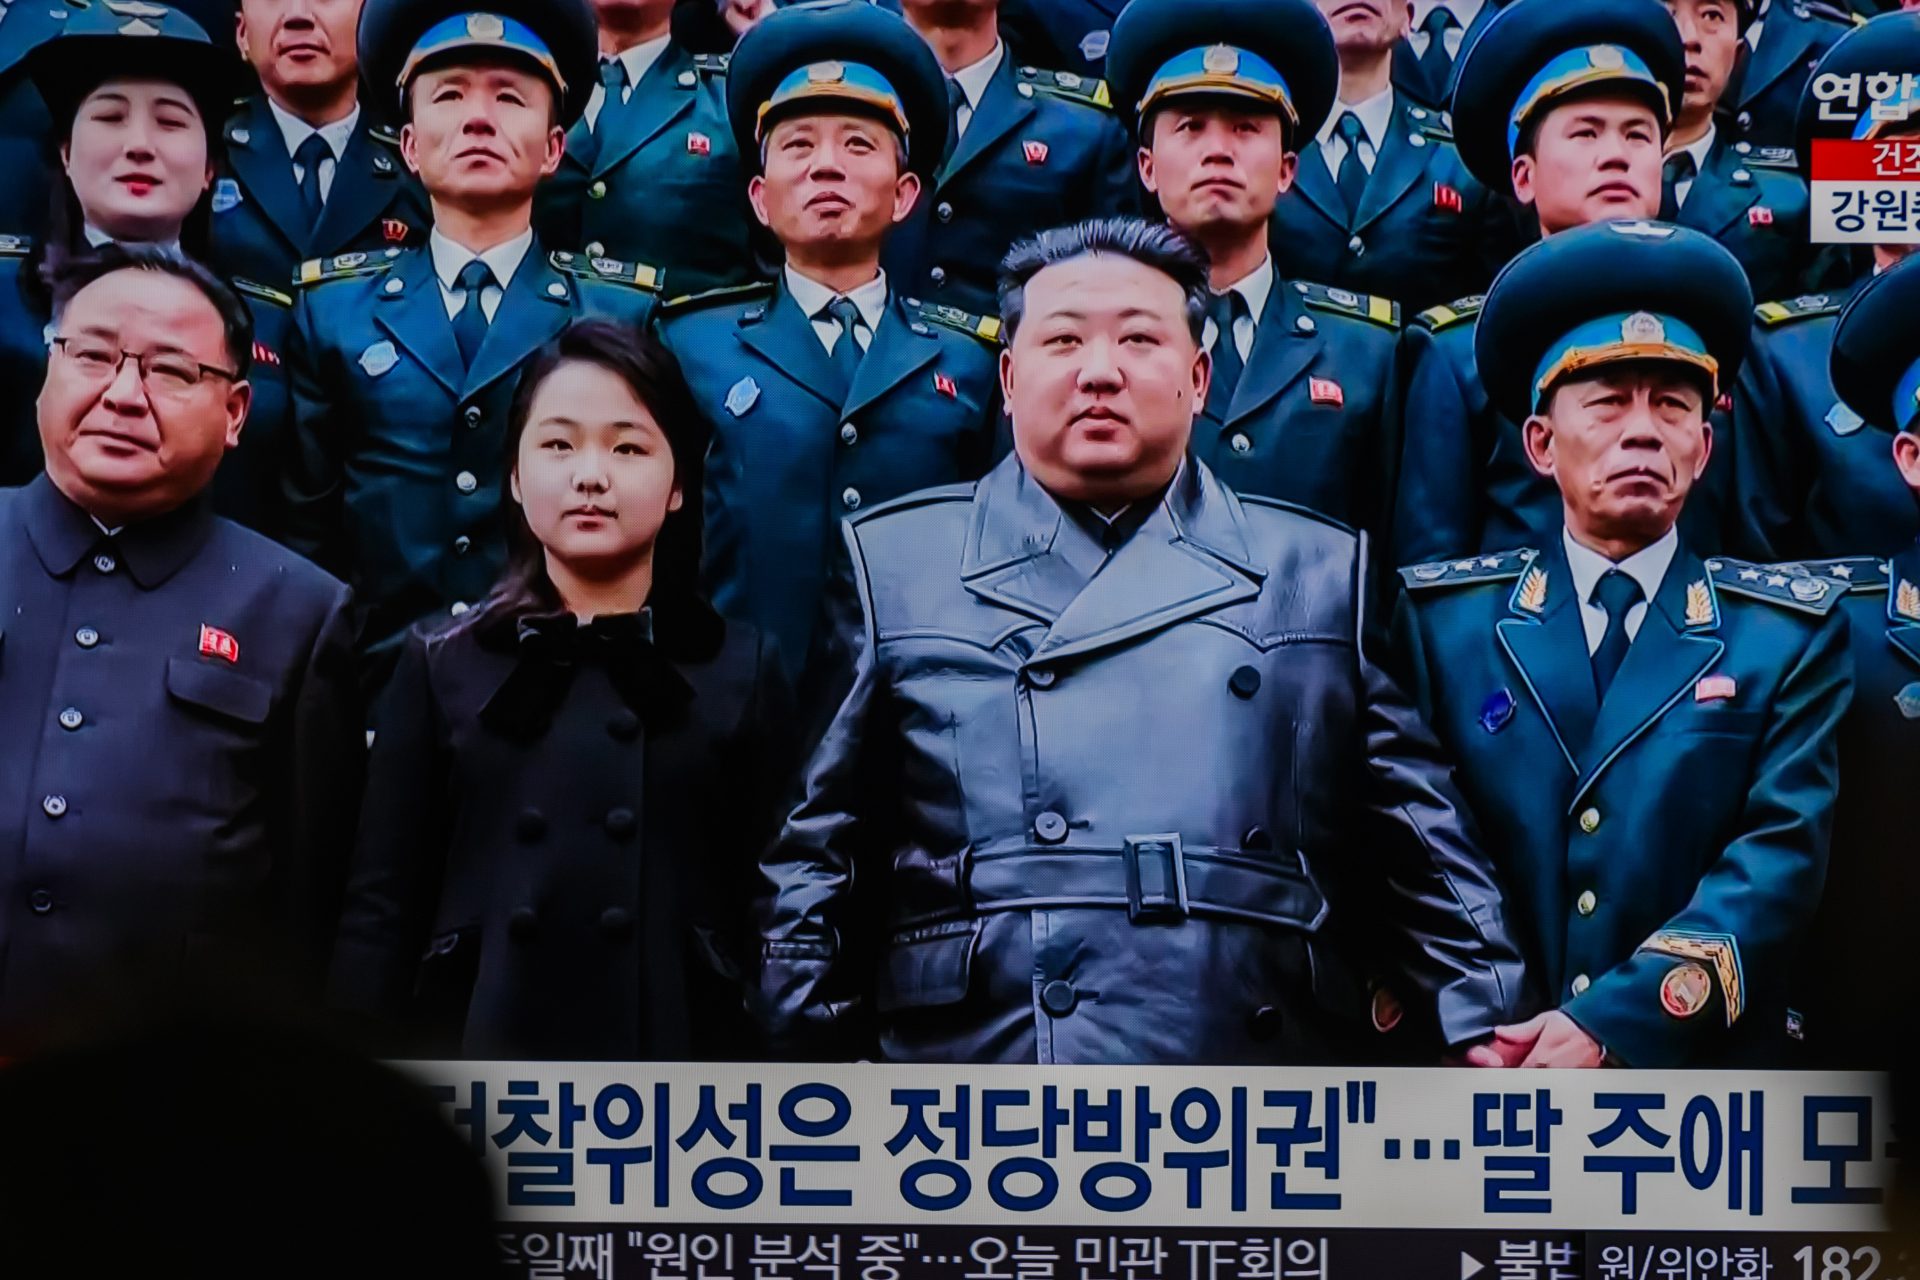 Is Kim Jong Un's daughter his designated successor?